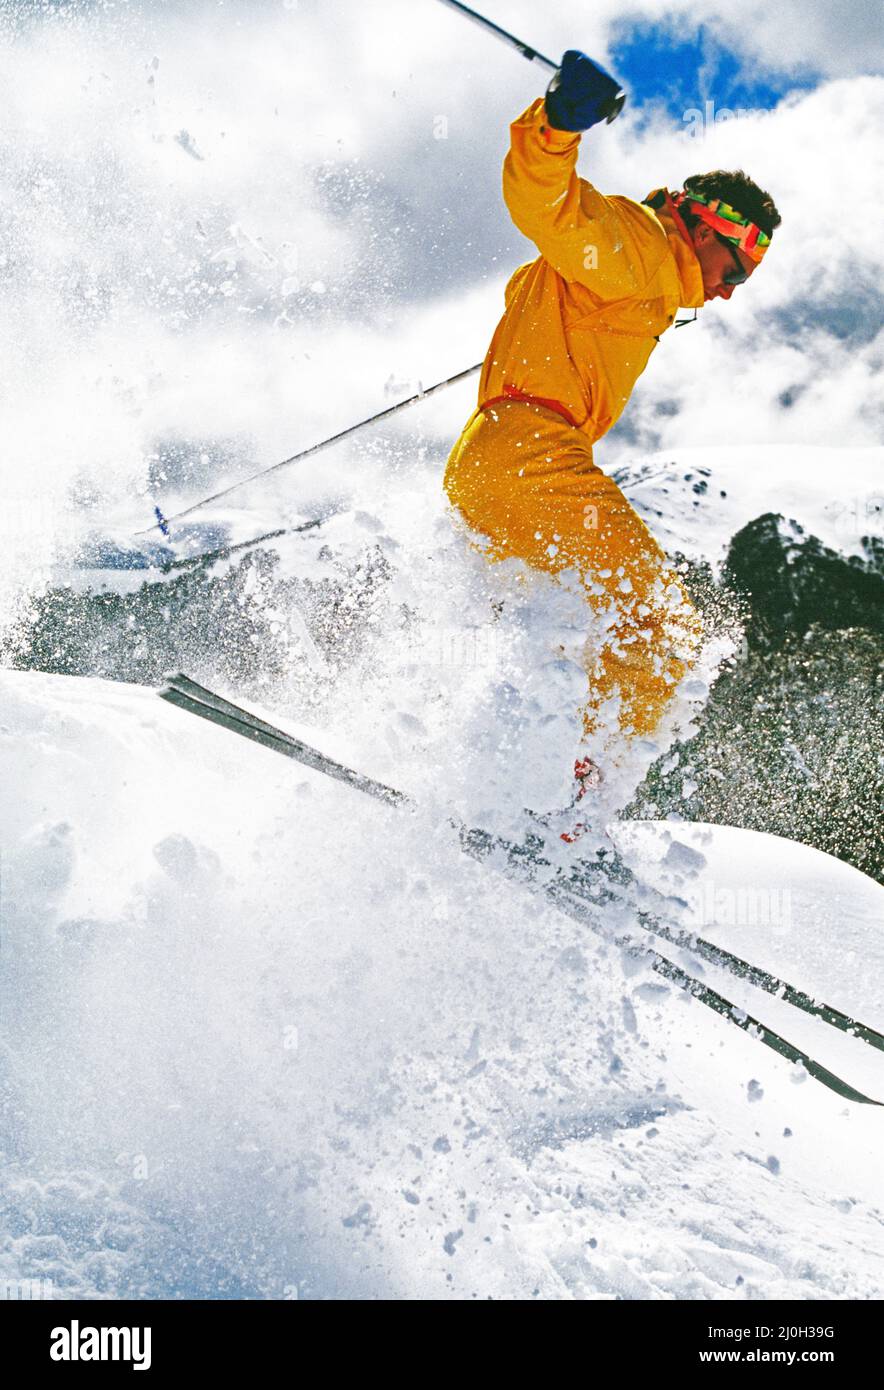 Australia. Snow skiing. Young man downhill skiing. Stock Photo